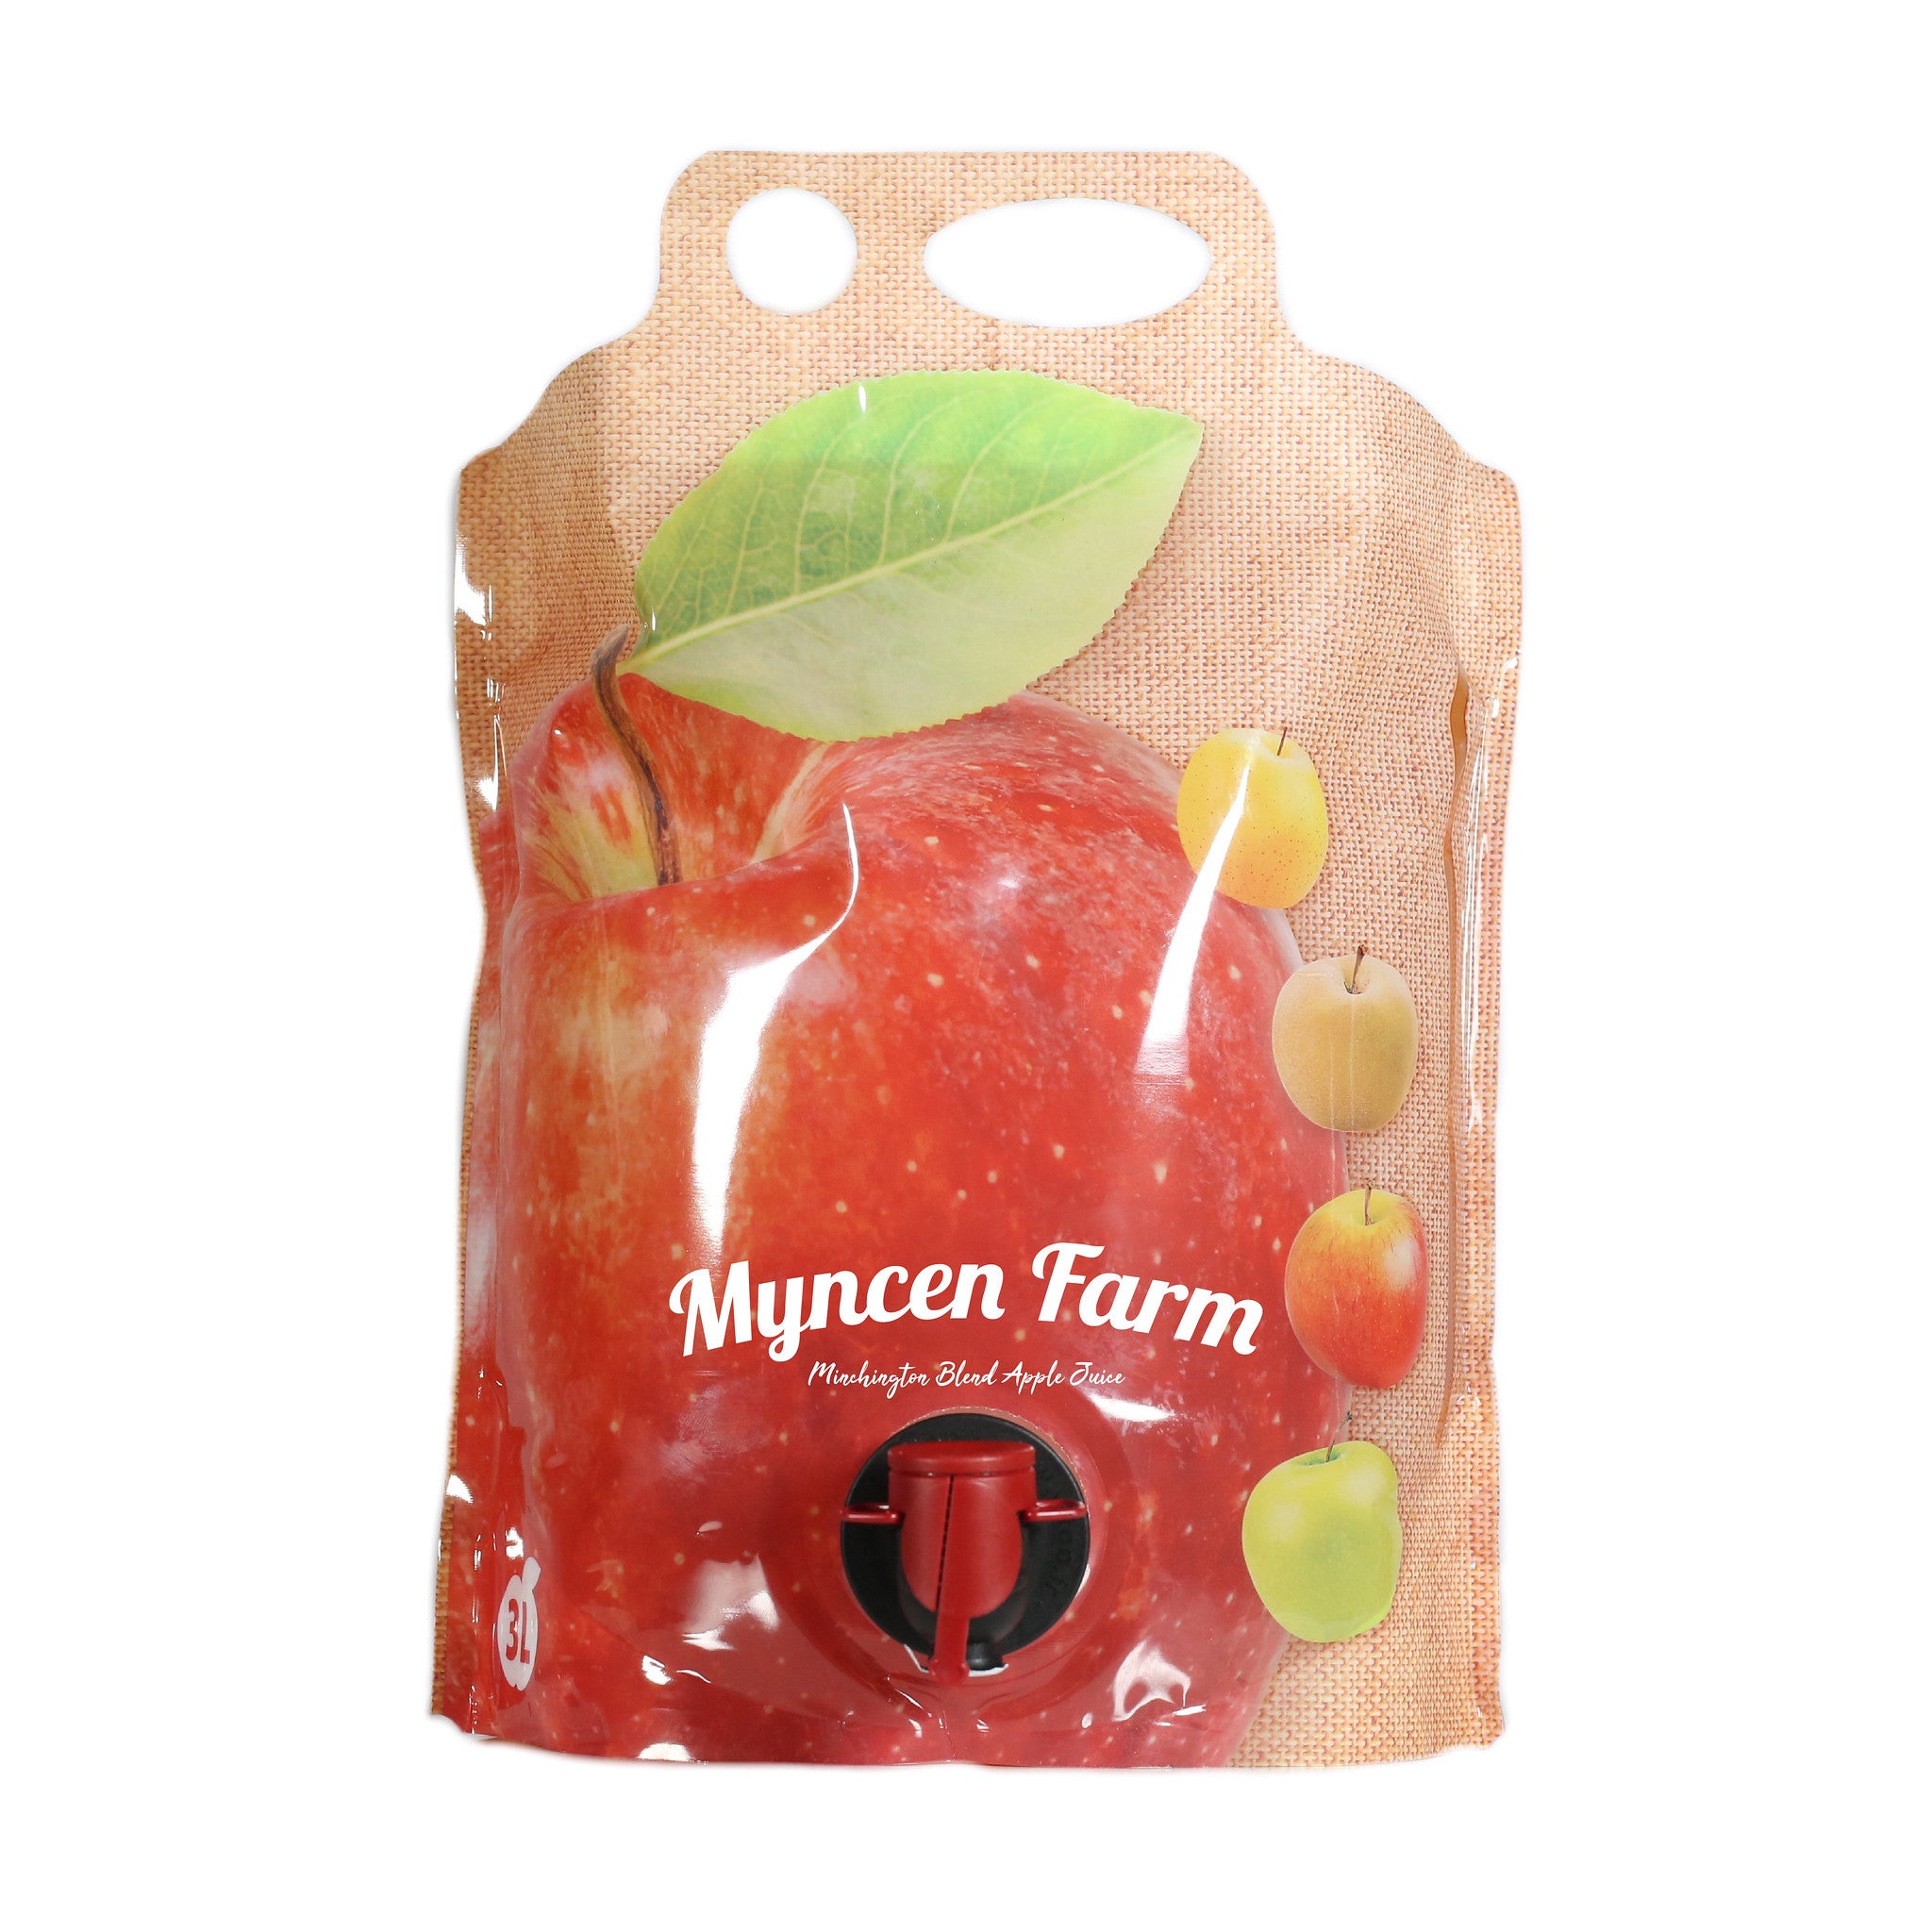 Myncen Farm 'Minchington Blend' Apple Juice 3L Pouch